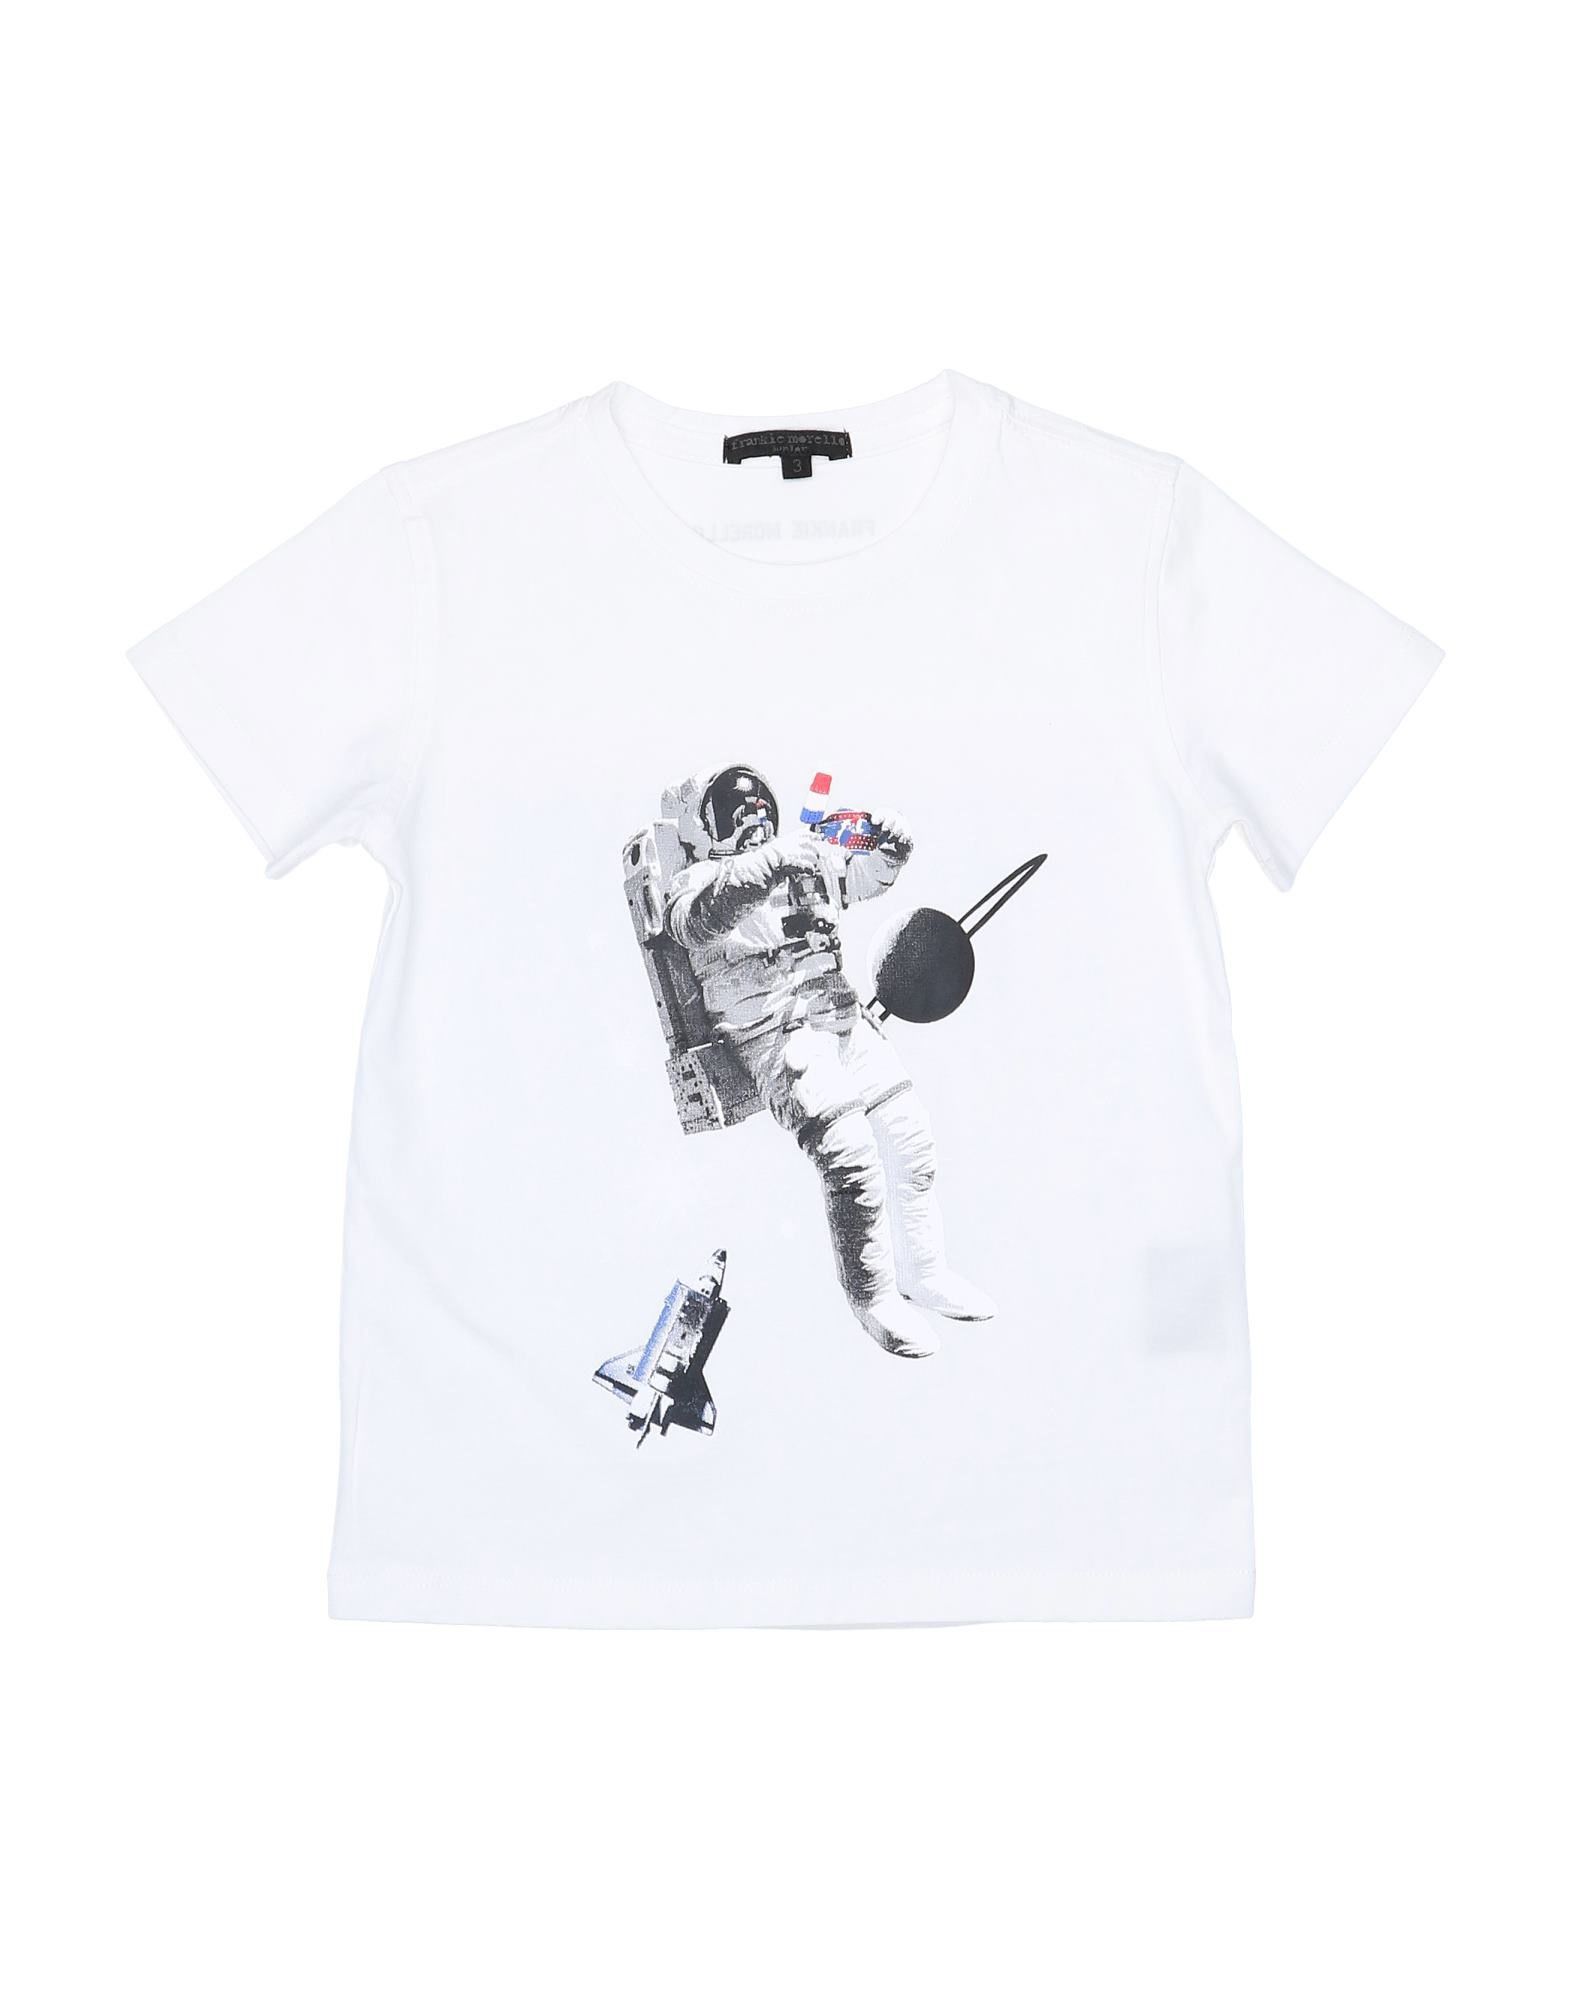 Frankie Morello Kids' T-shirts In White